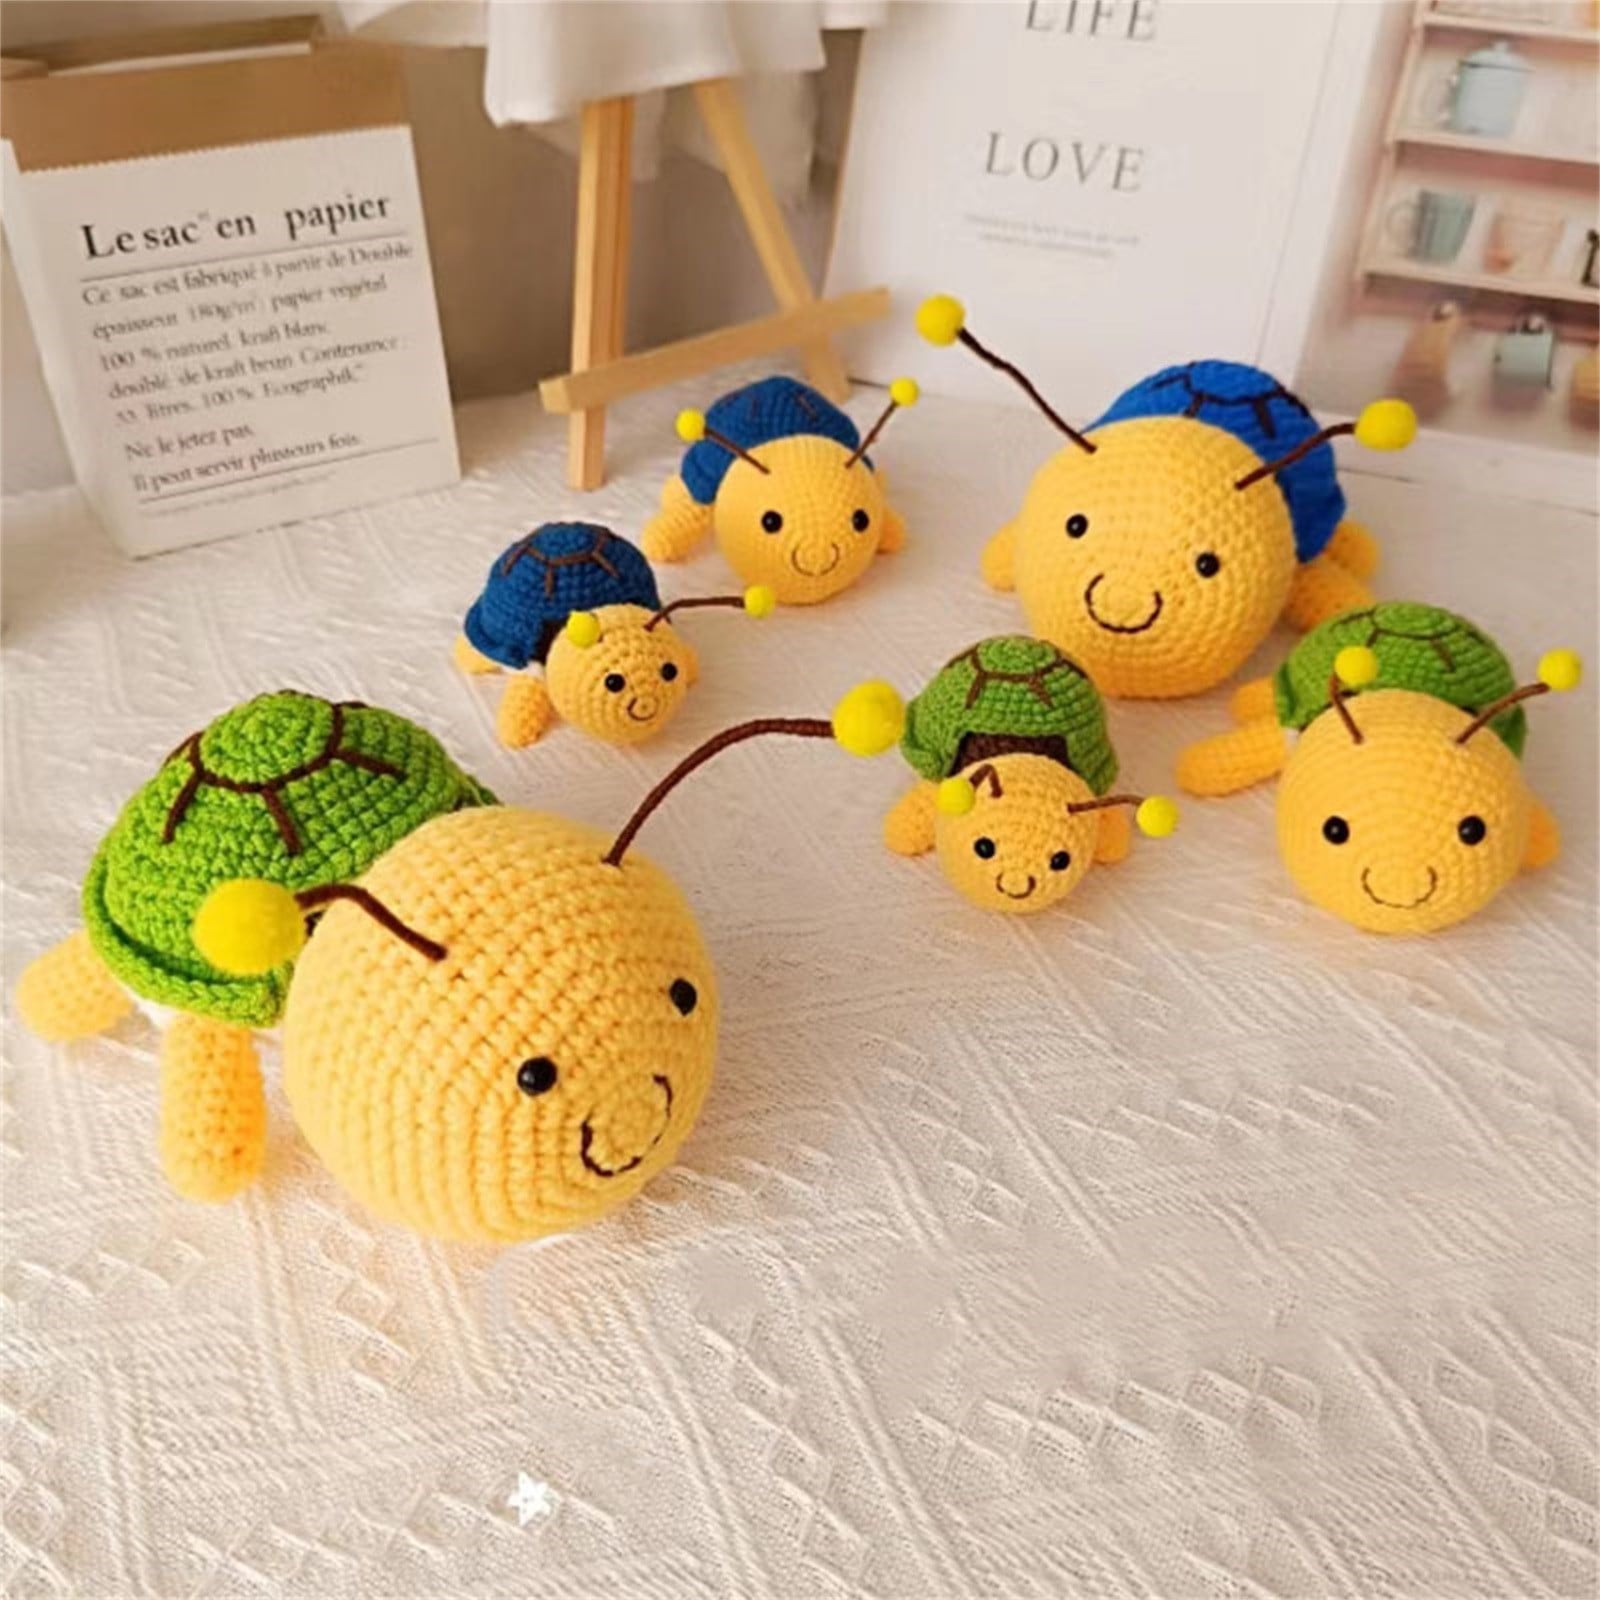 tsobrush turtle bee crochet kit for beginners - diy cute